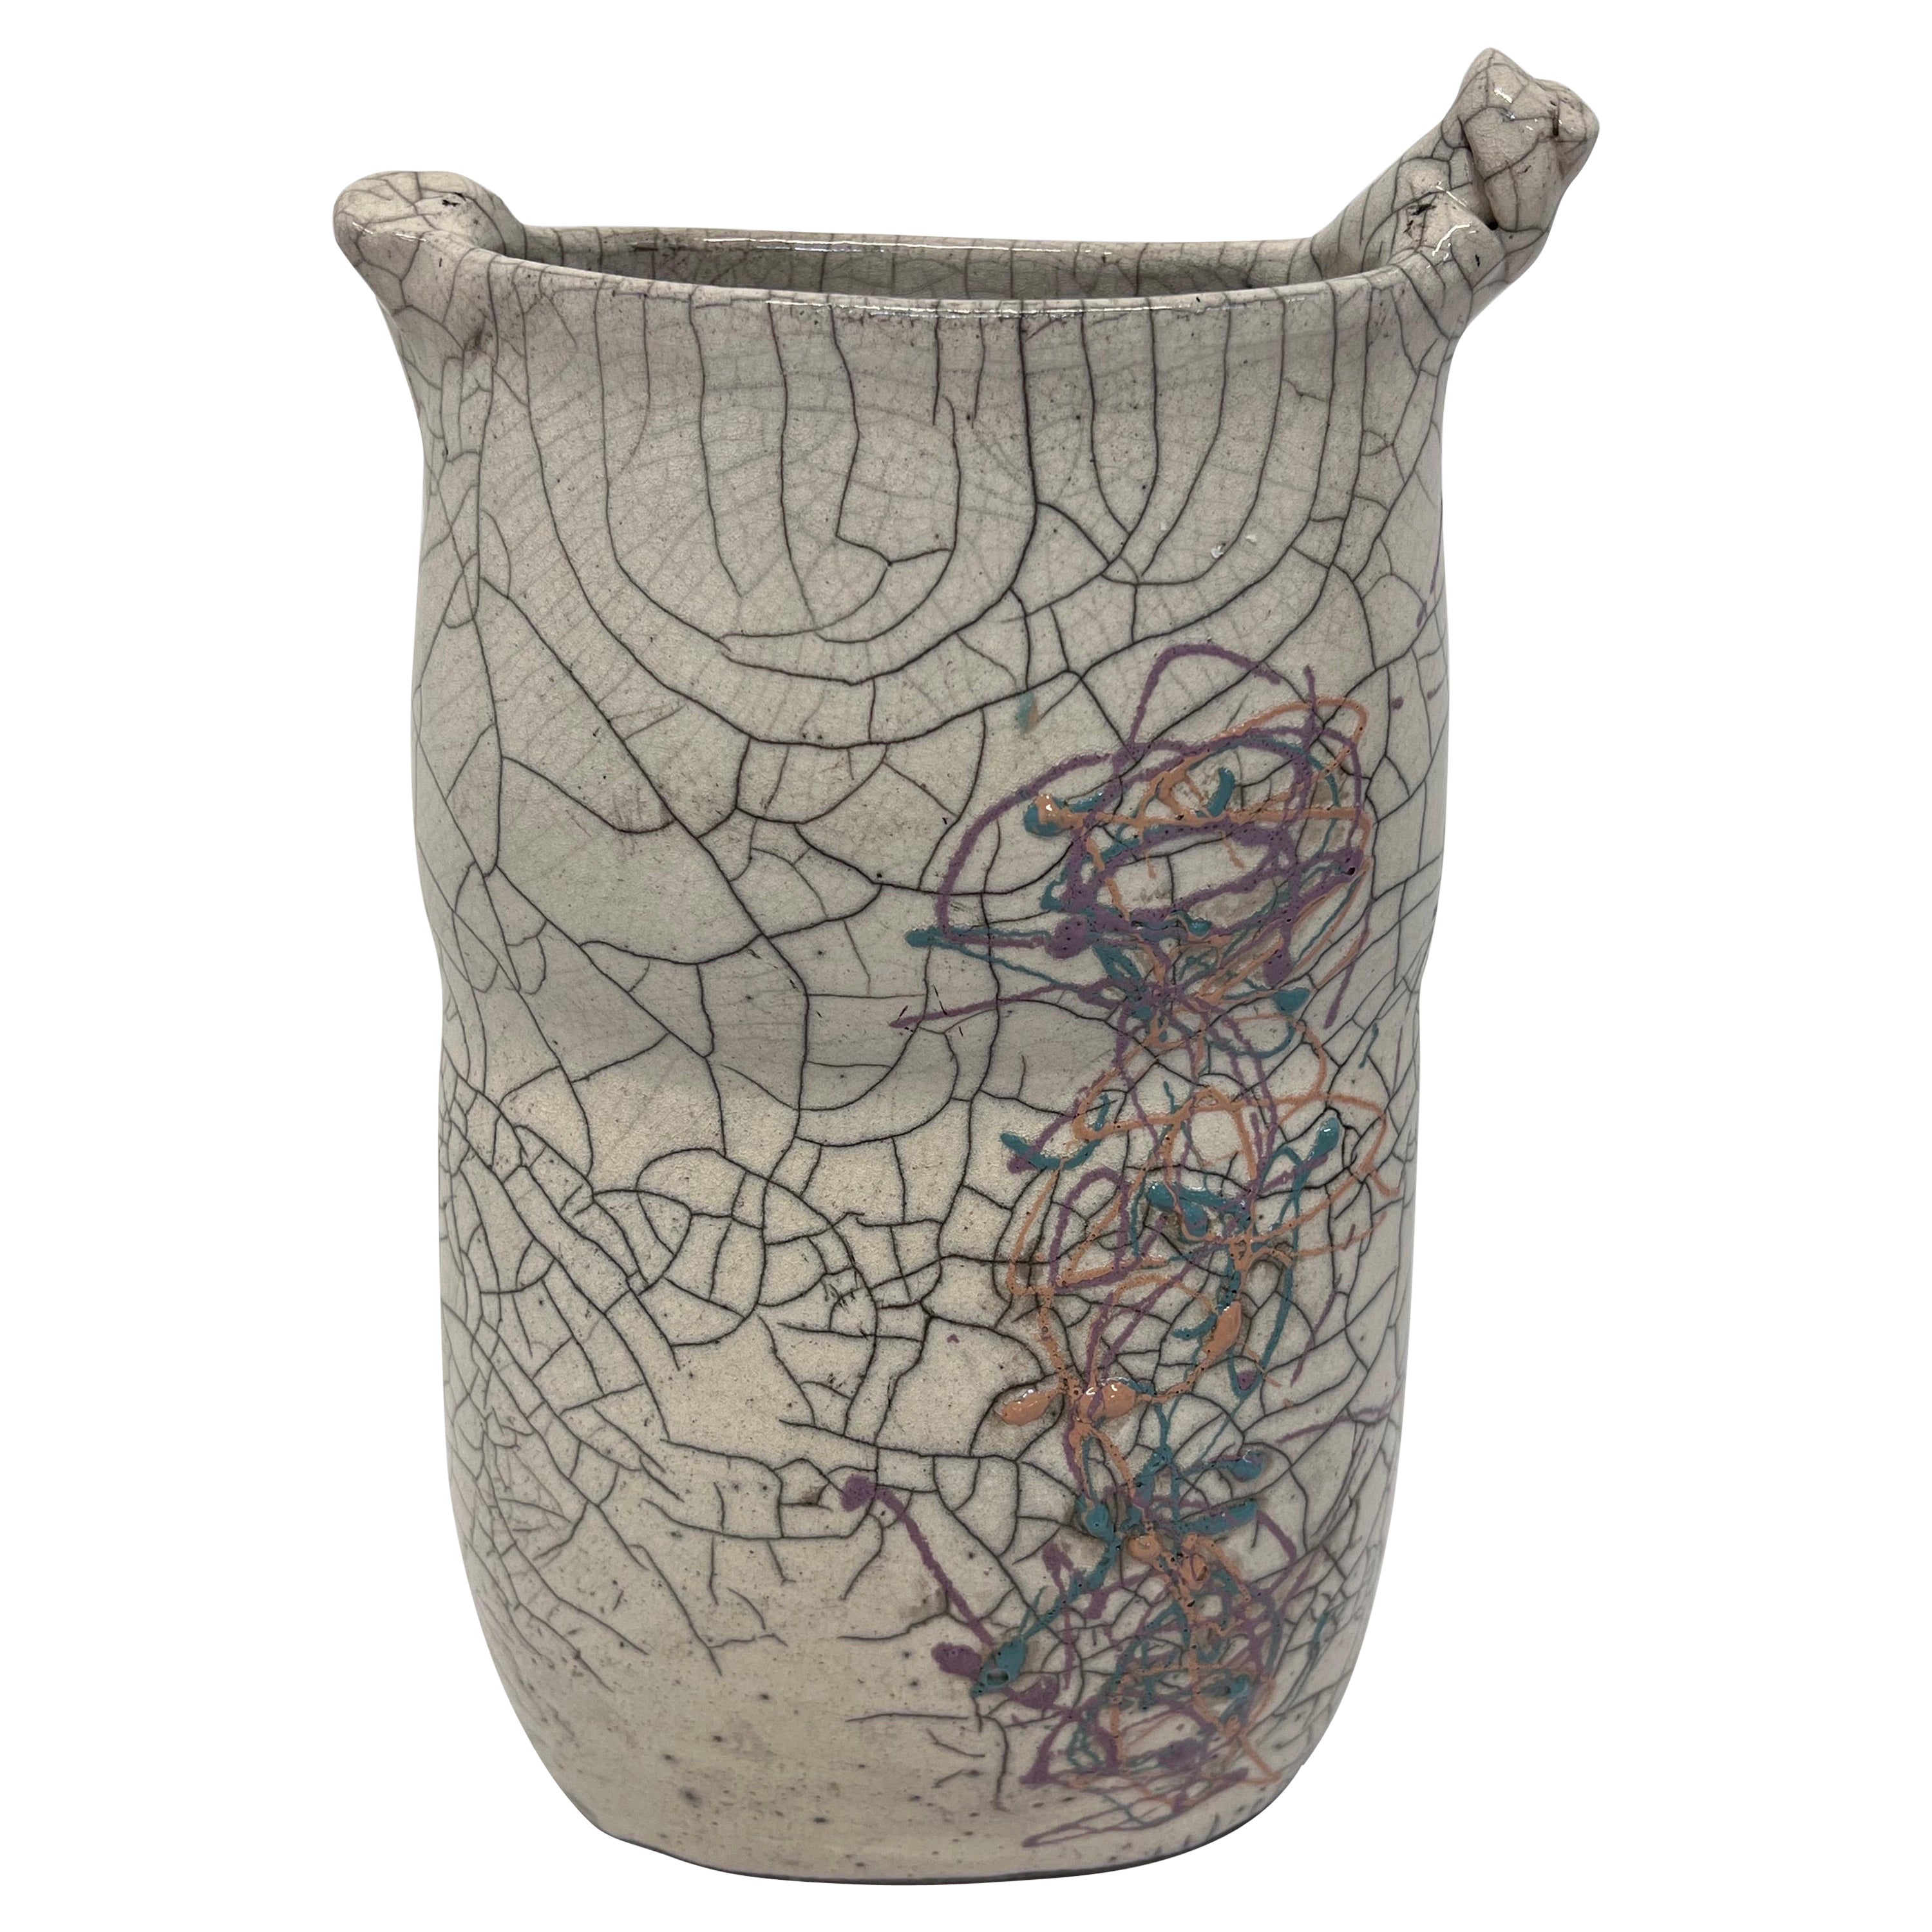 Postmodern Crackled Glaze Studio Pottery Vase with Colorful Design, 1980s For Sale